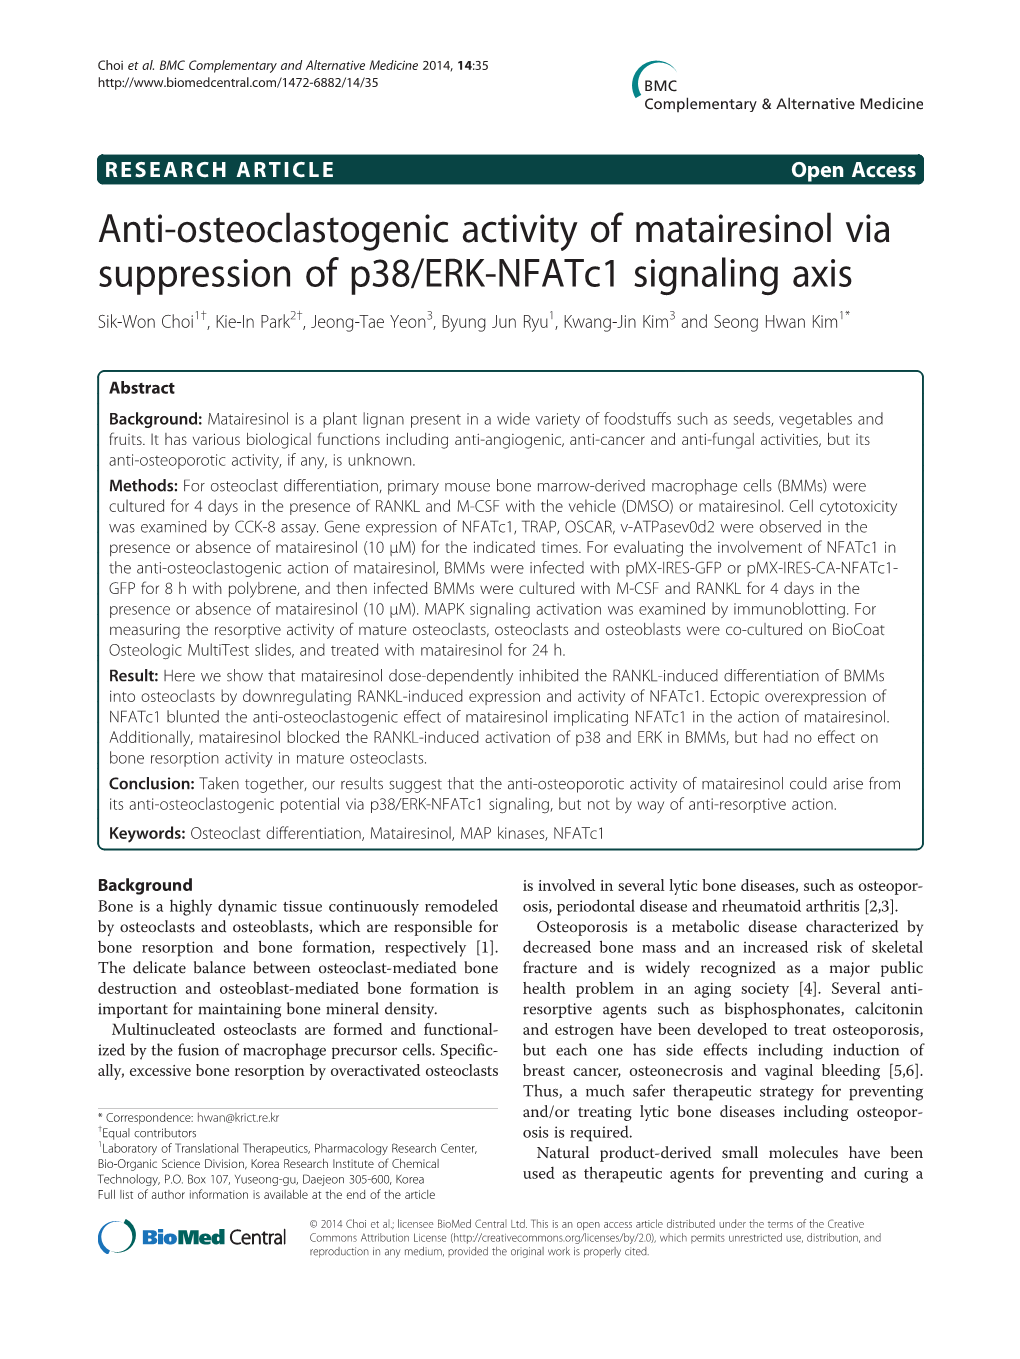 Anti-Osteoclastogenic Activity of Matairesinol Via Suppression of P38